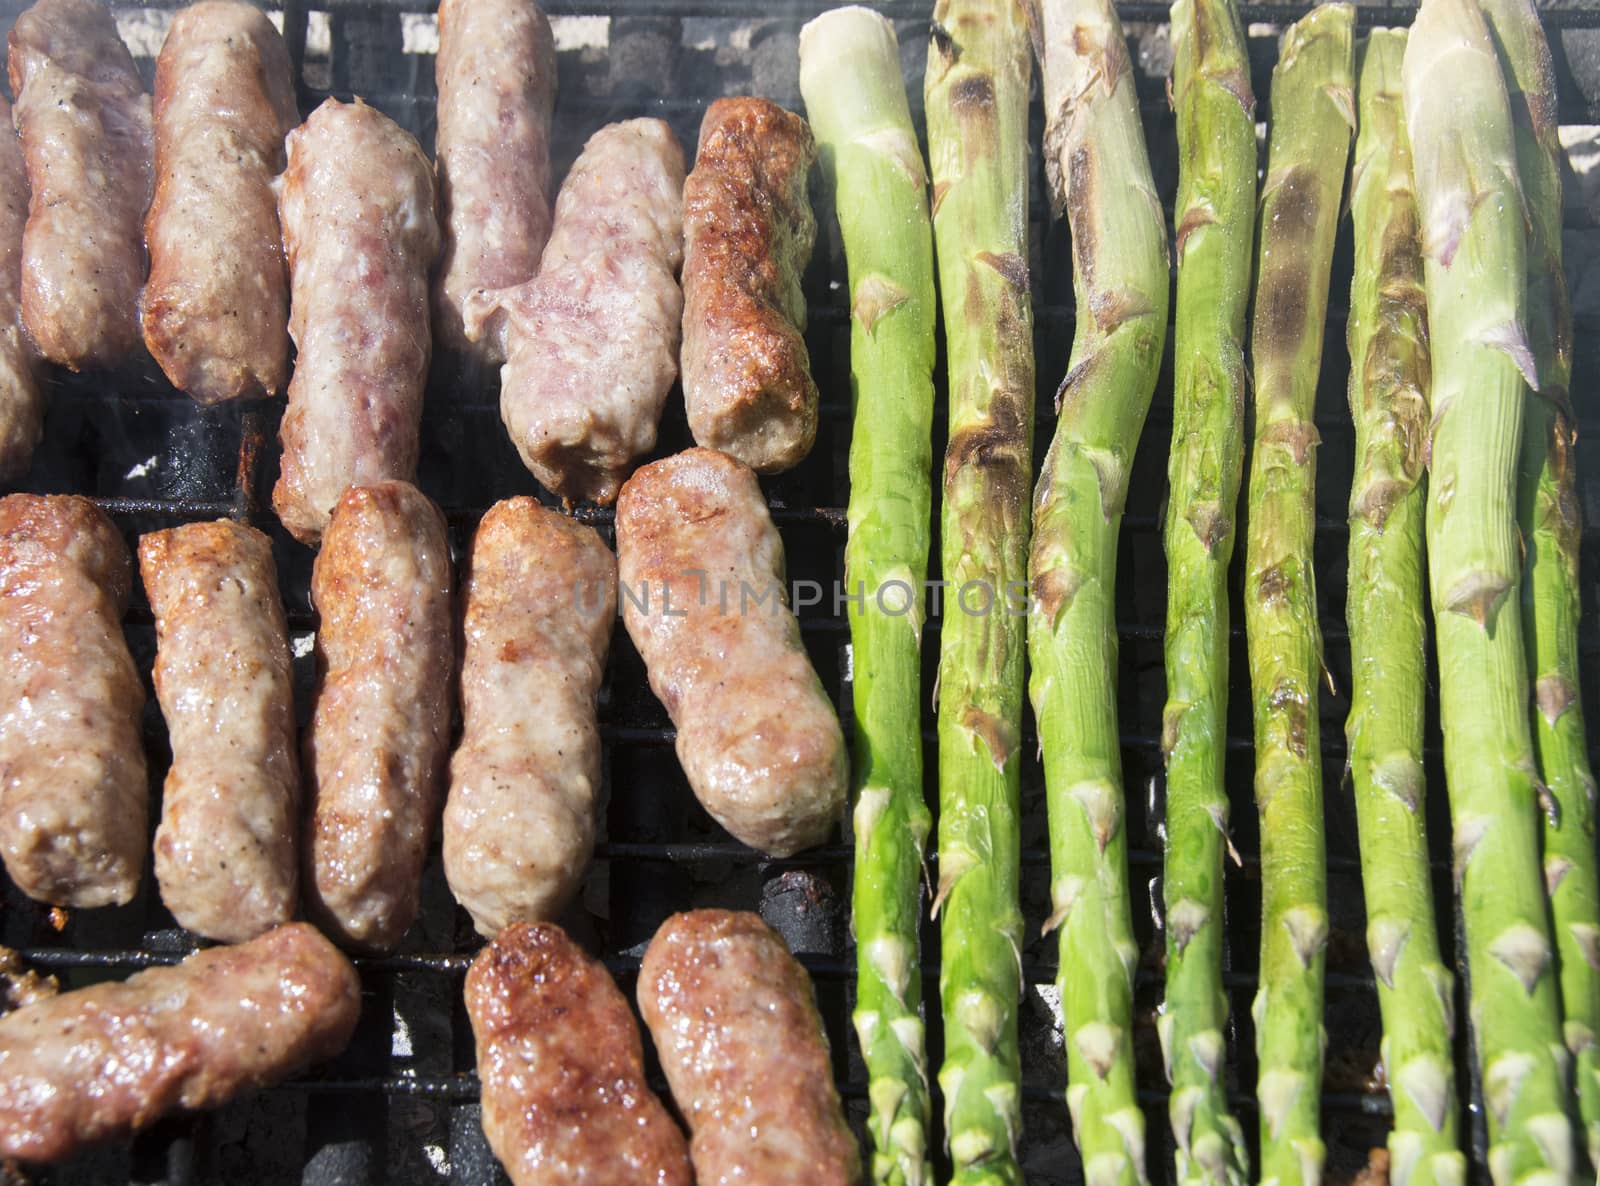 Cevapi, famous Balkan dish, and asparagus on a grill.